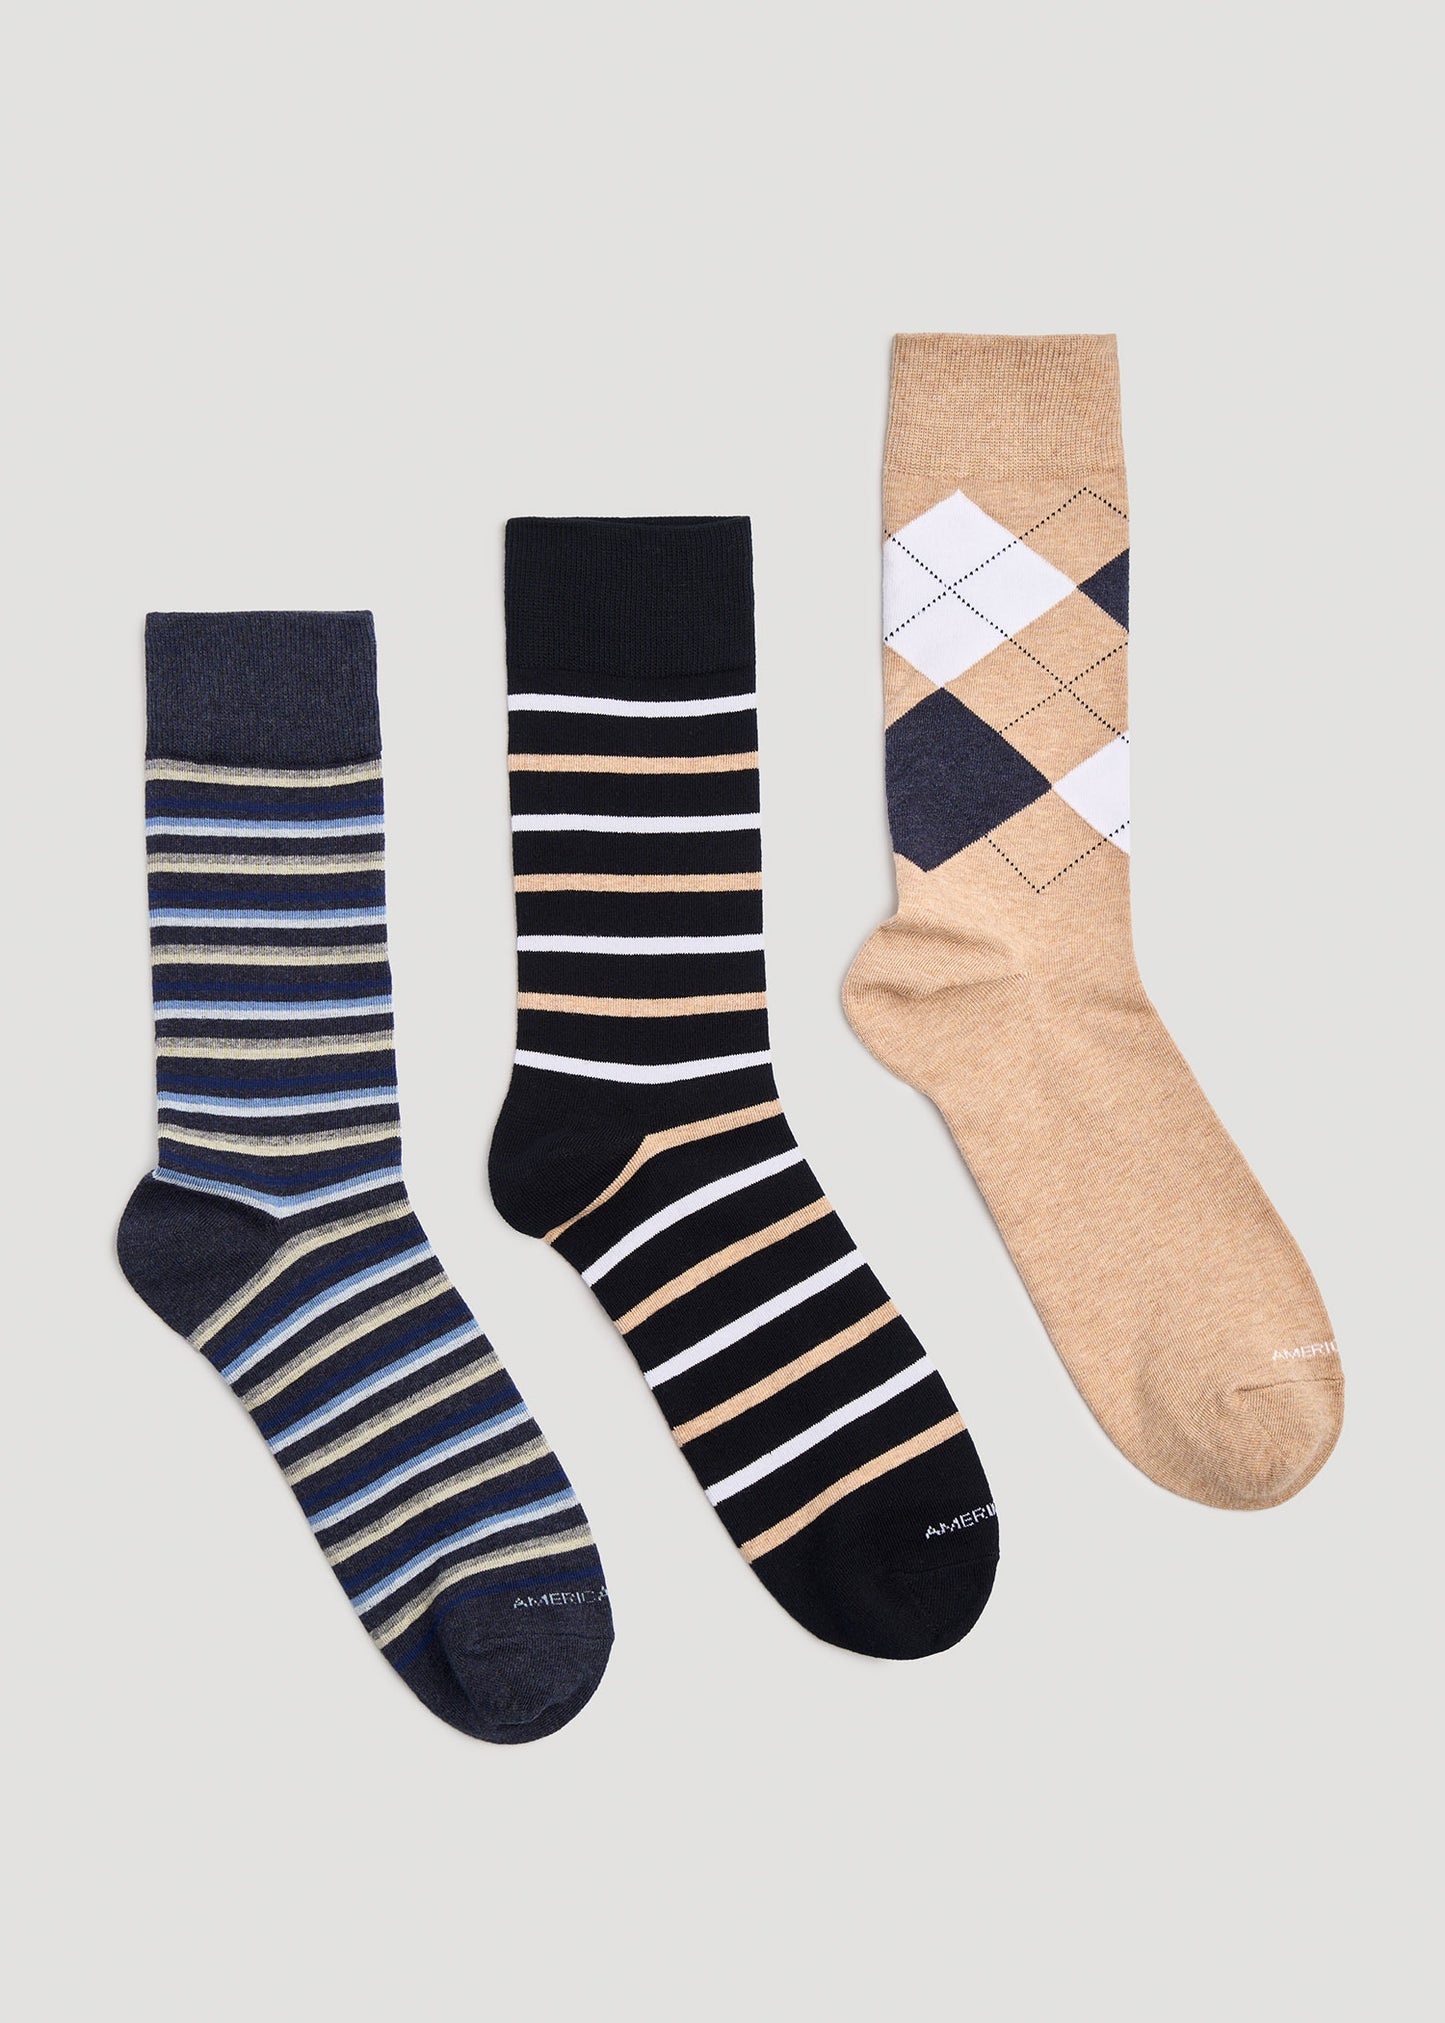     American-Tall-Mens-XL-Dress-Socks-Size-14-17-3-Pack-E-Detail2